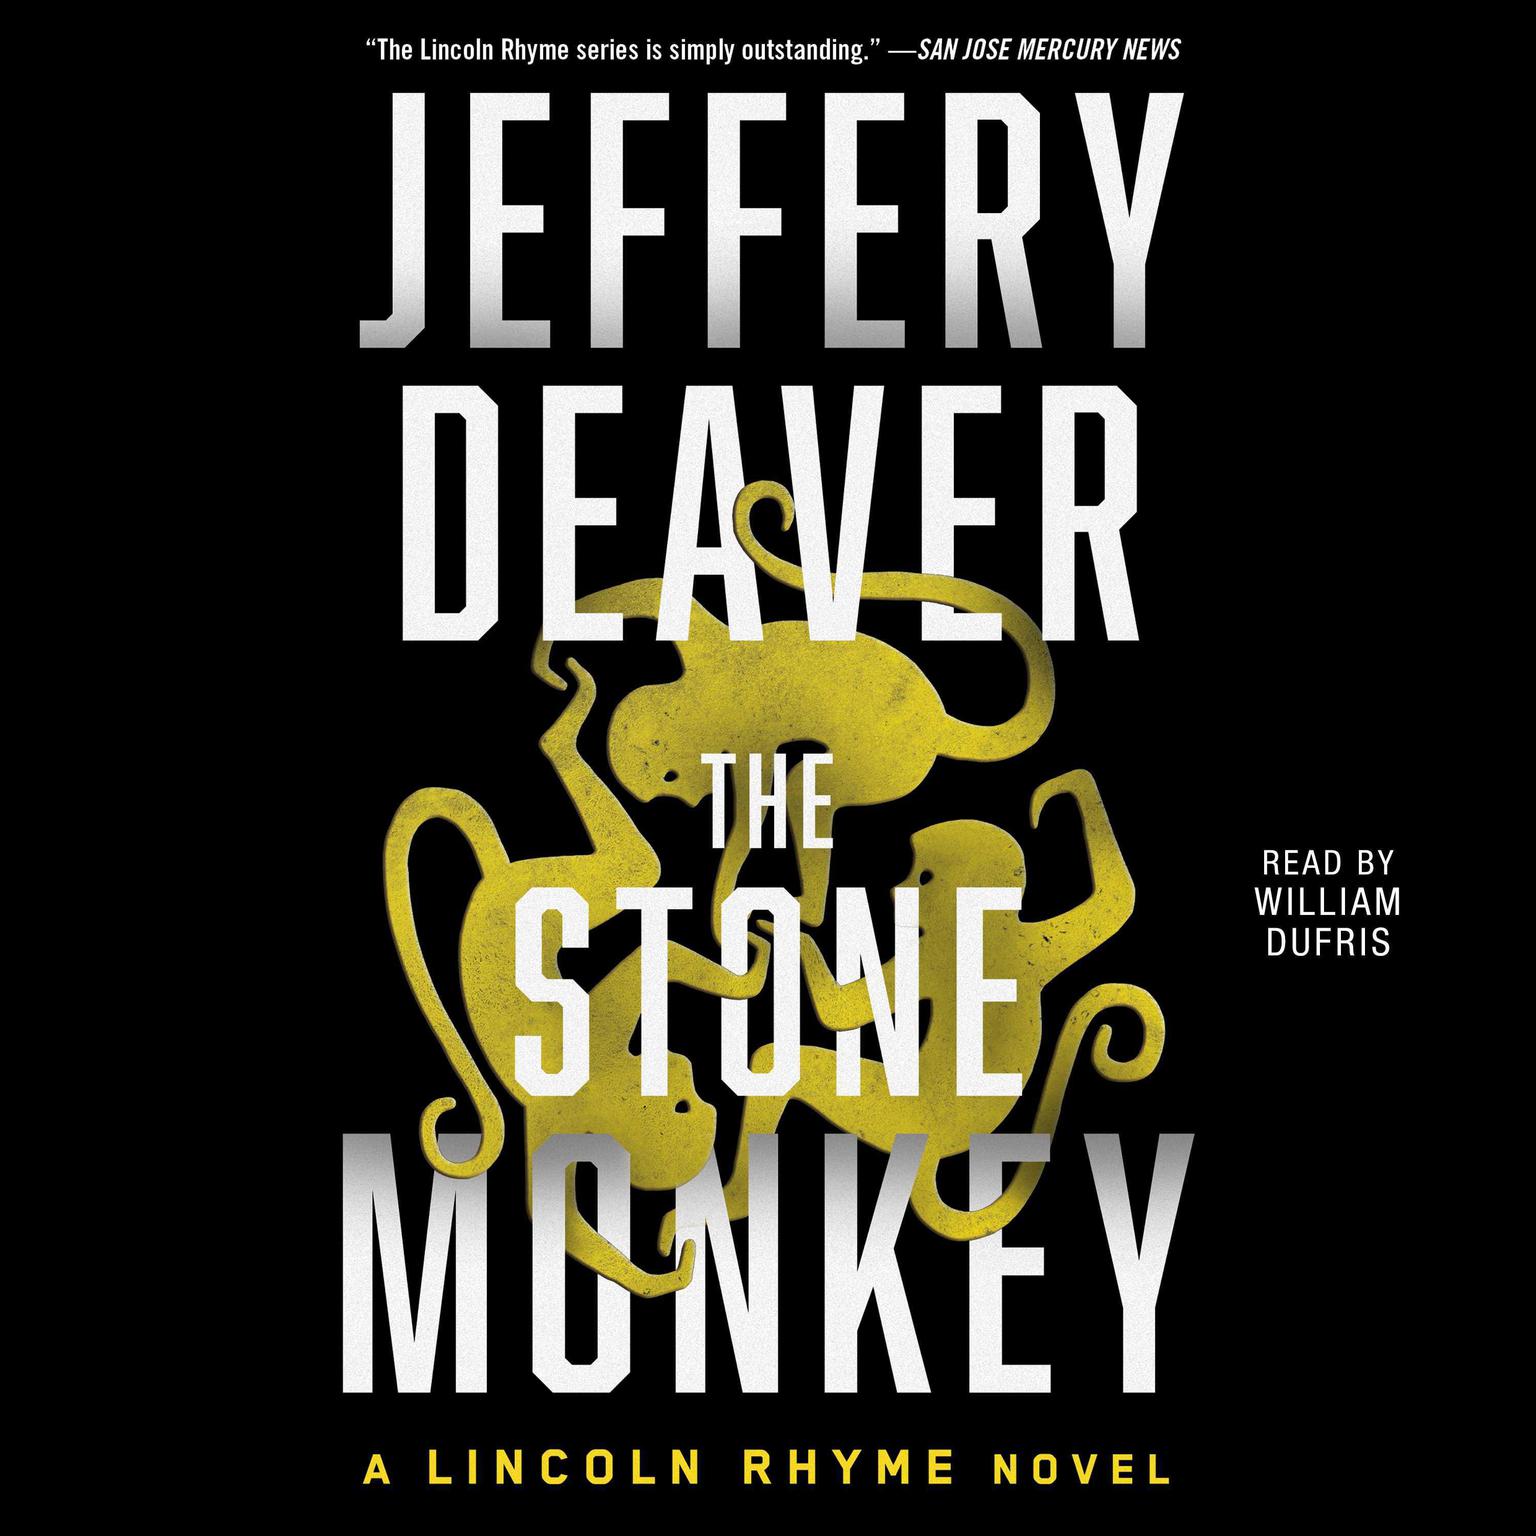 Stone Monkey: A Lincoln Rhyme Novel Audiobook, by Jeffery Deaver